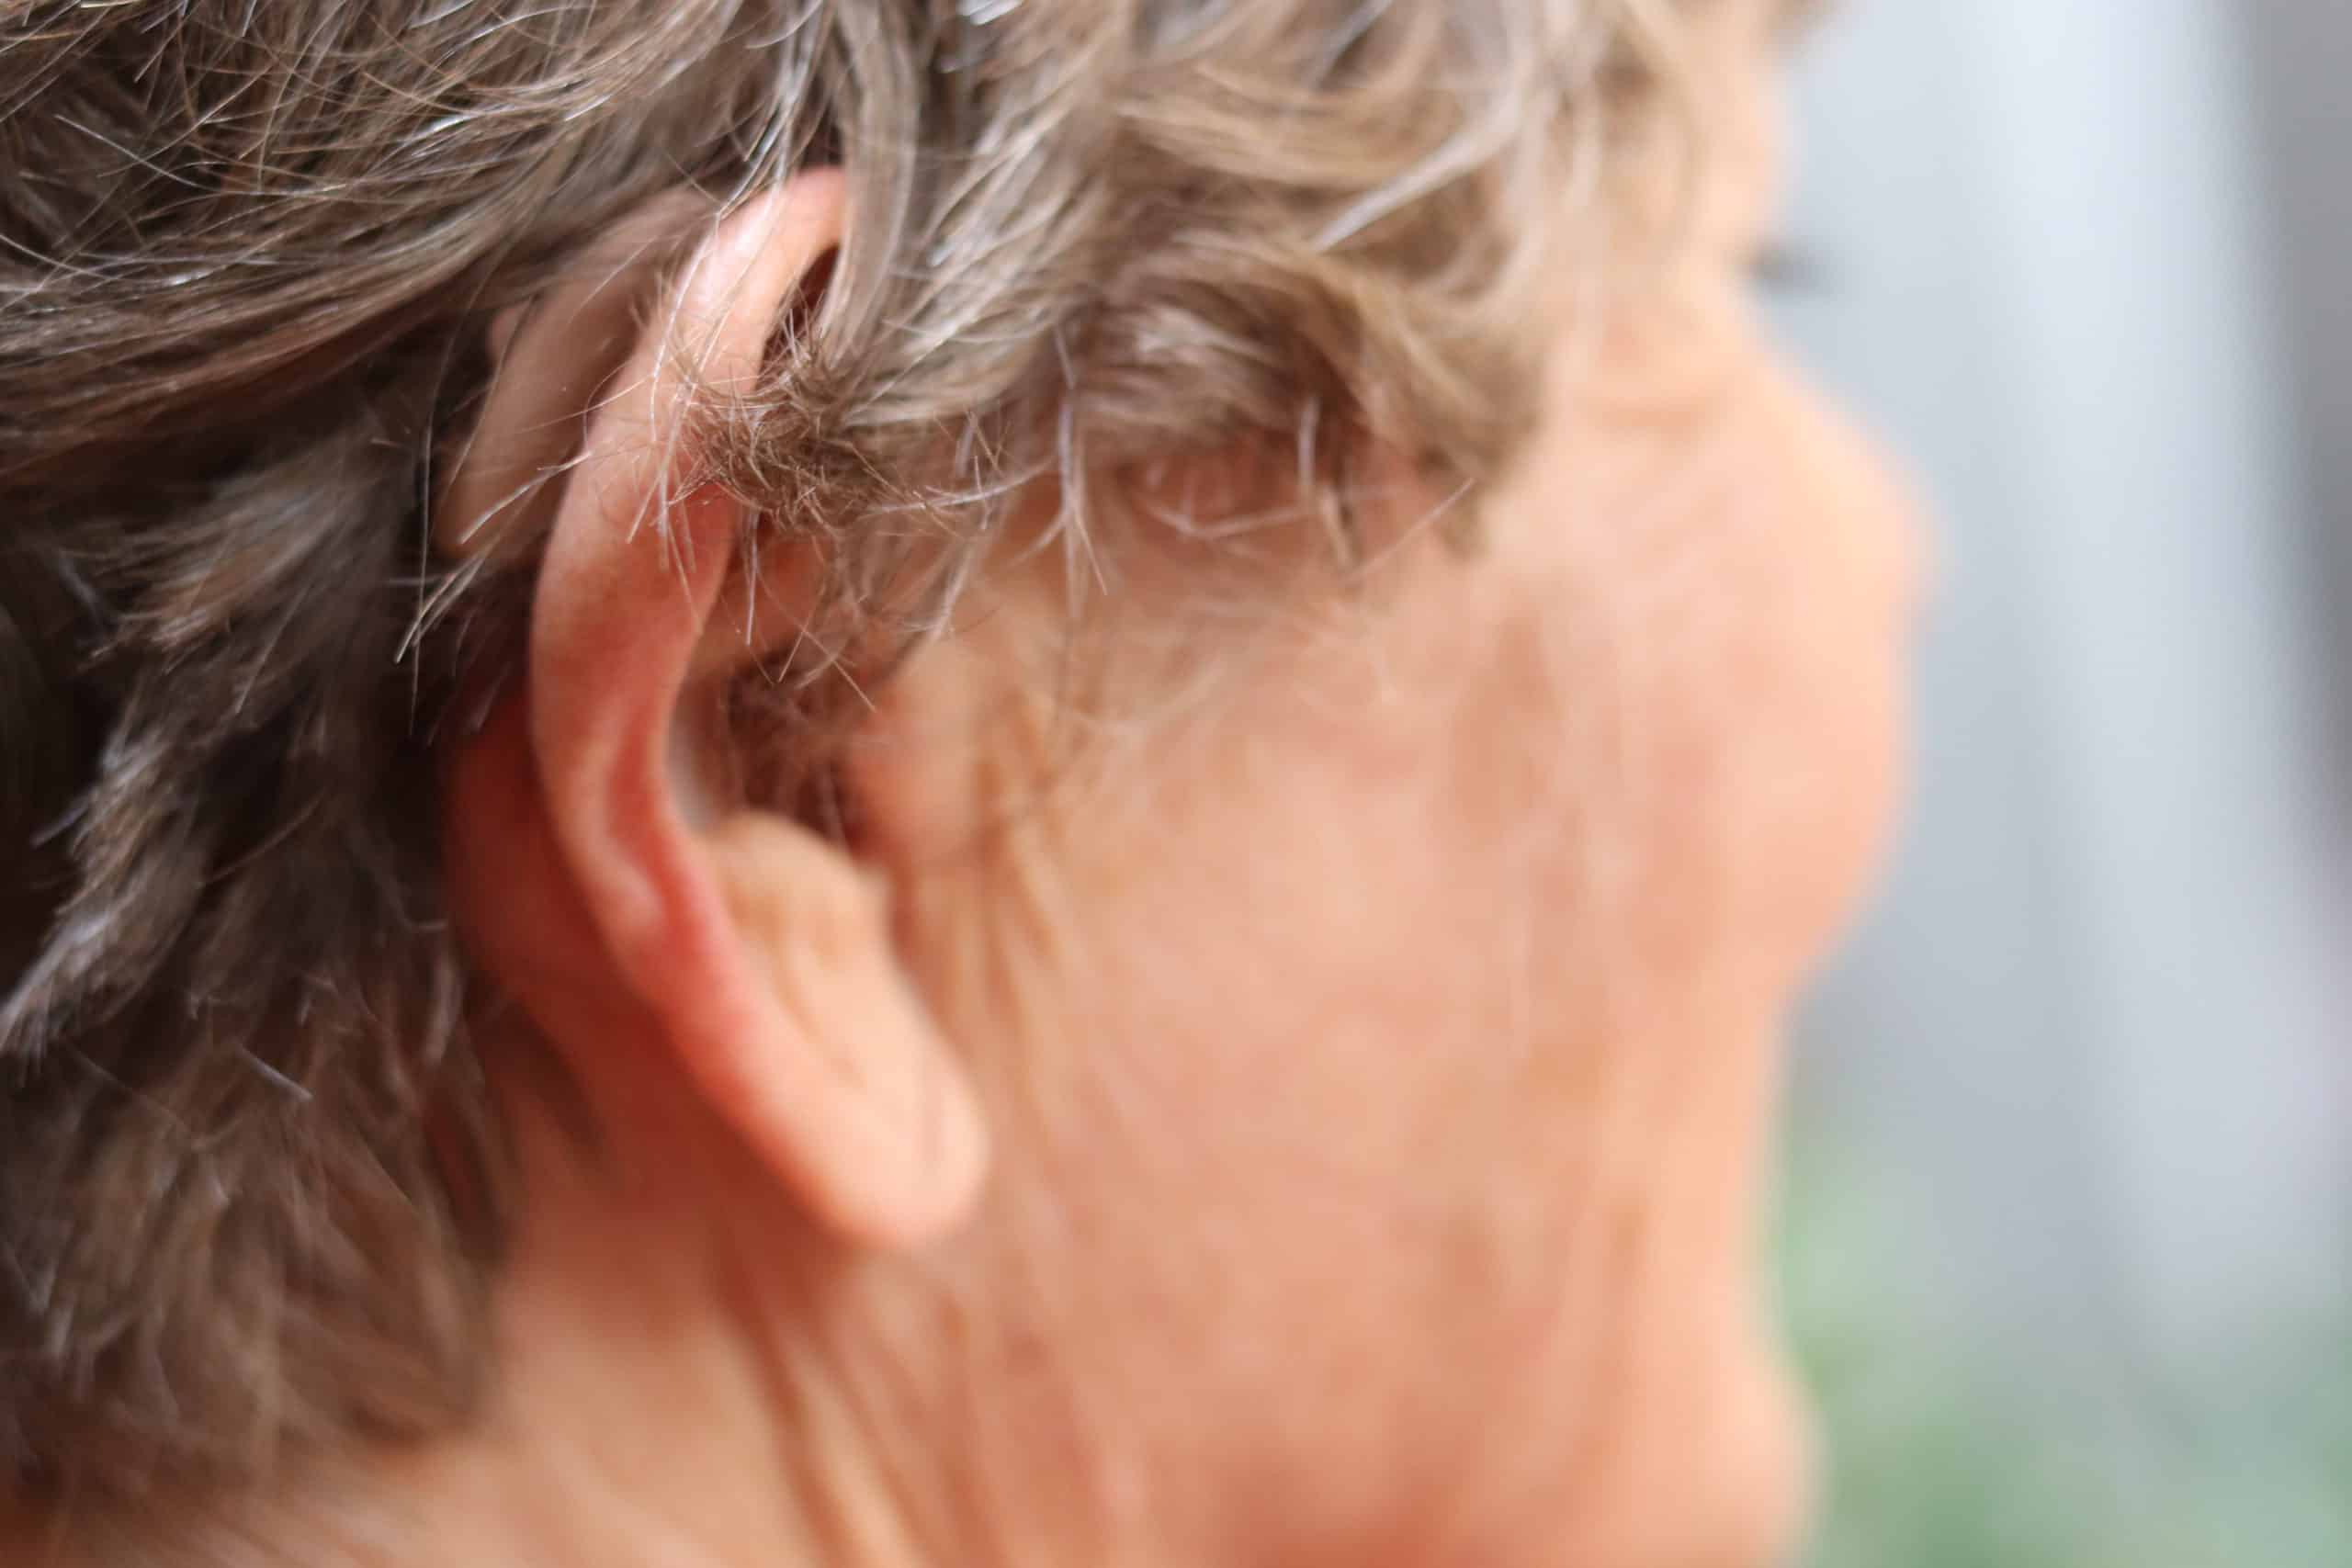 Little Fingers Earring Aid :: helps secure & remove earring backs